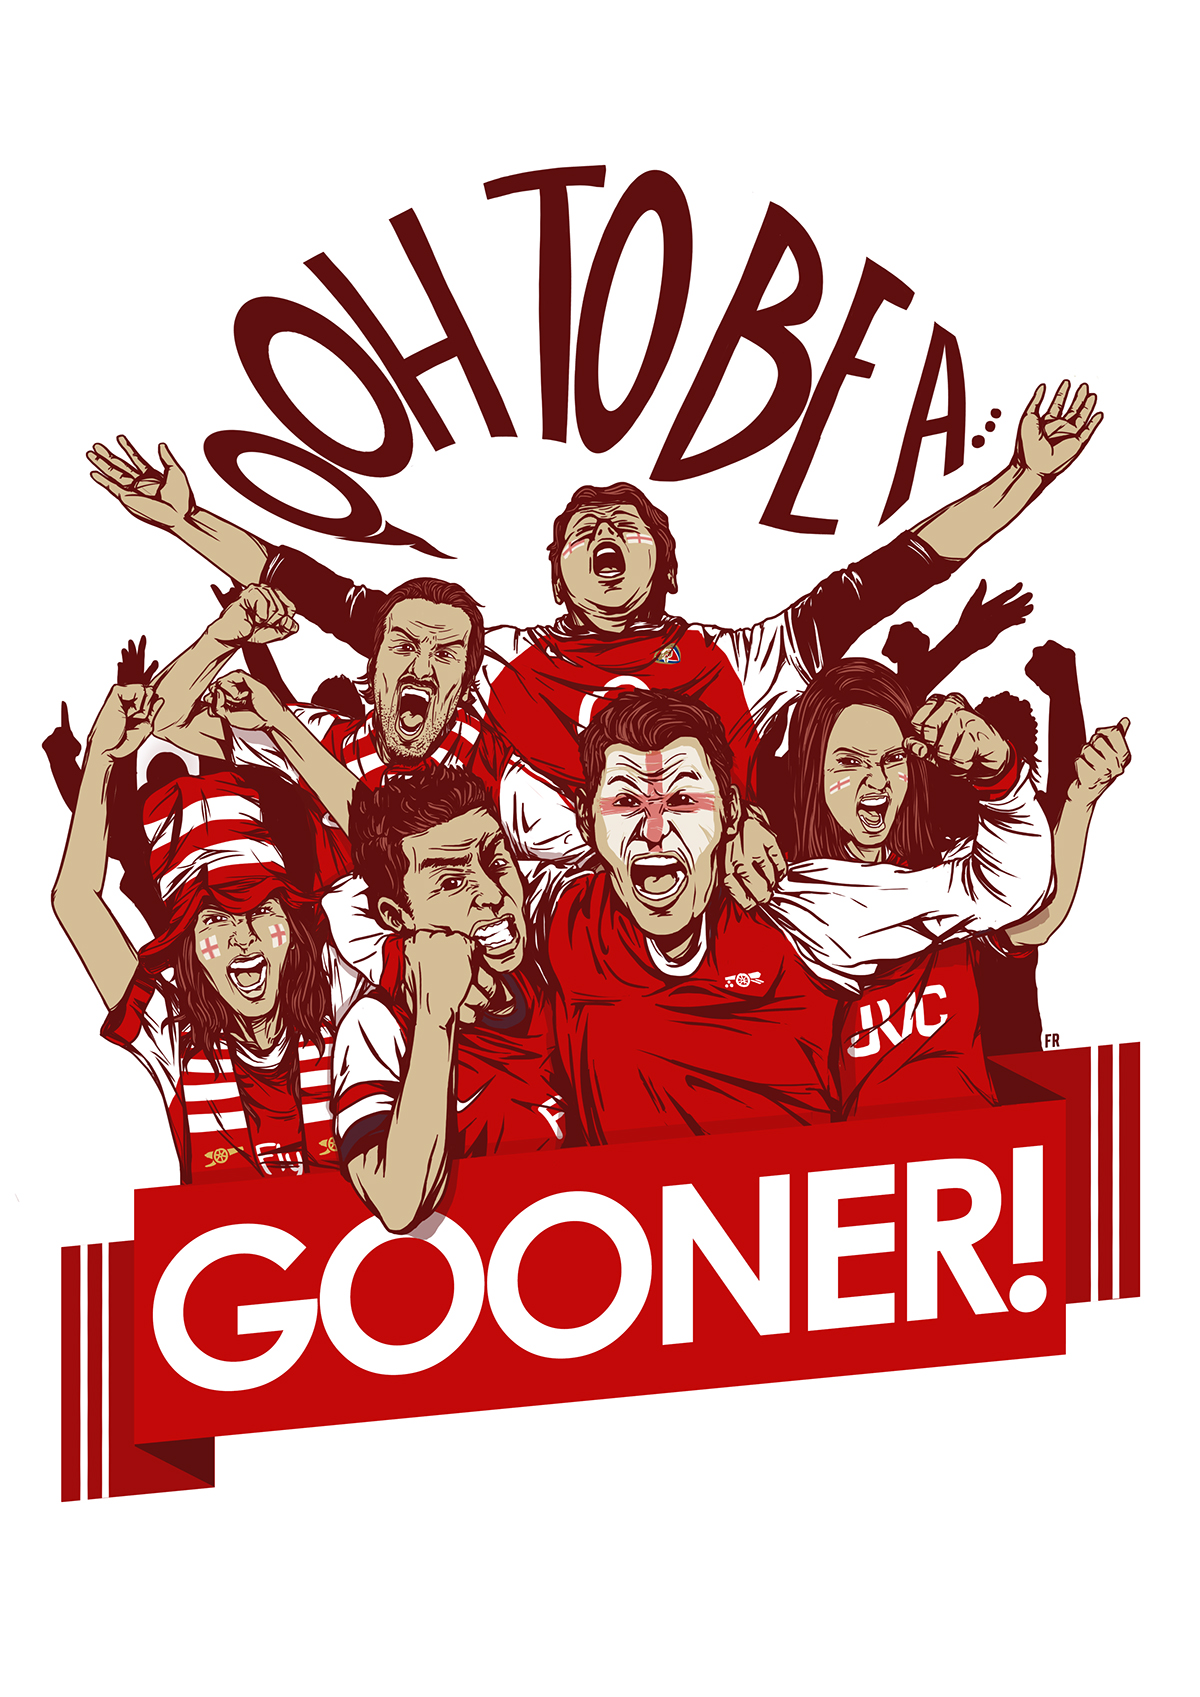 OOH to be gooner arsenal fc red soccer t-shirt Hooligan indonesia the ravydera taste